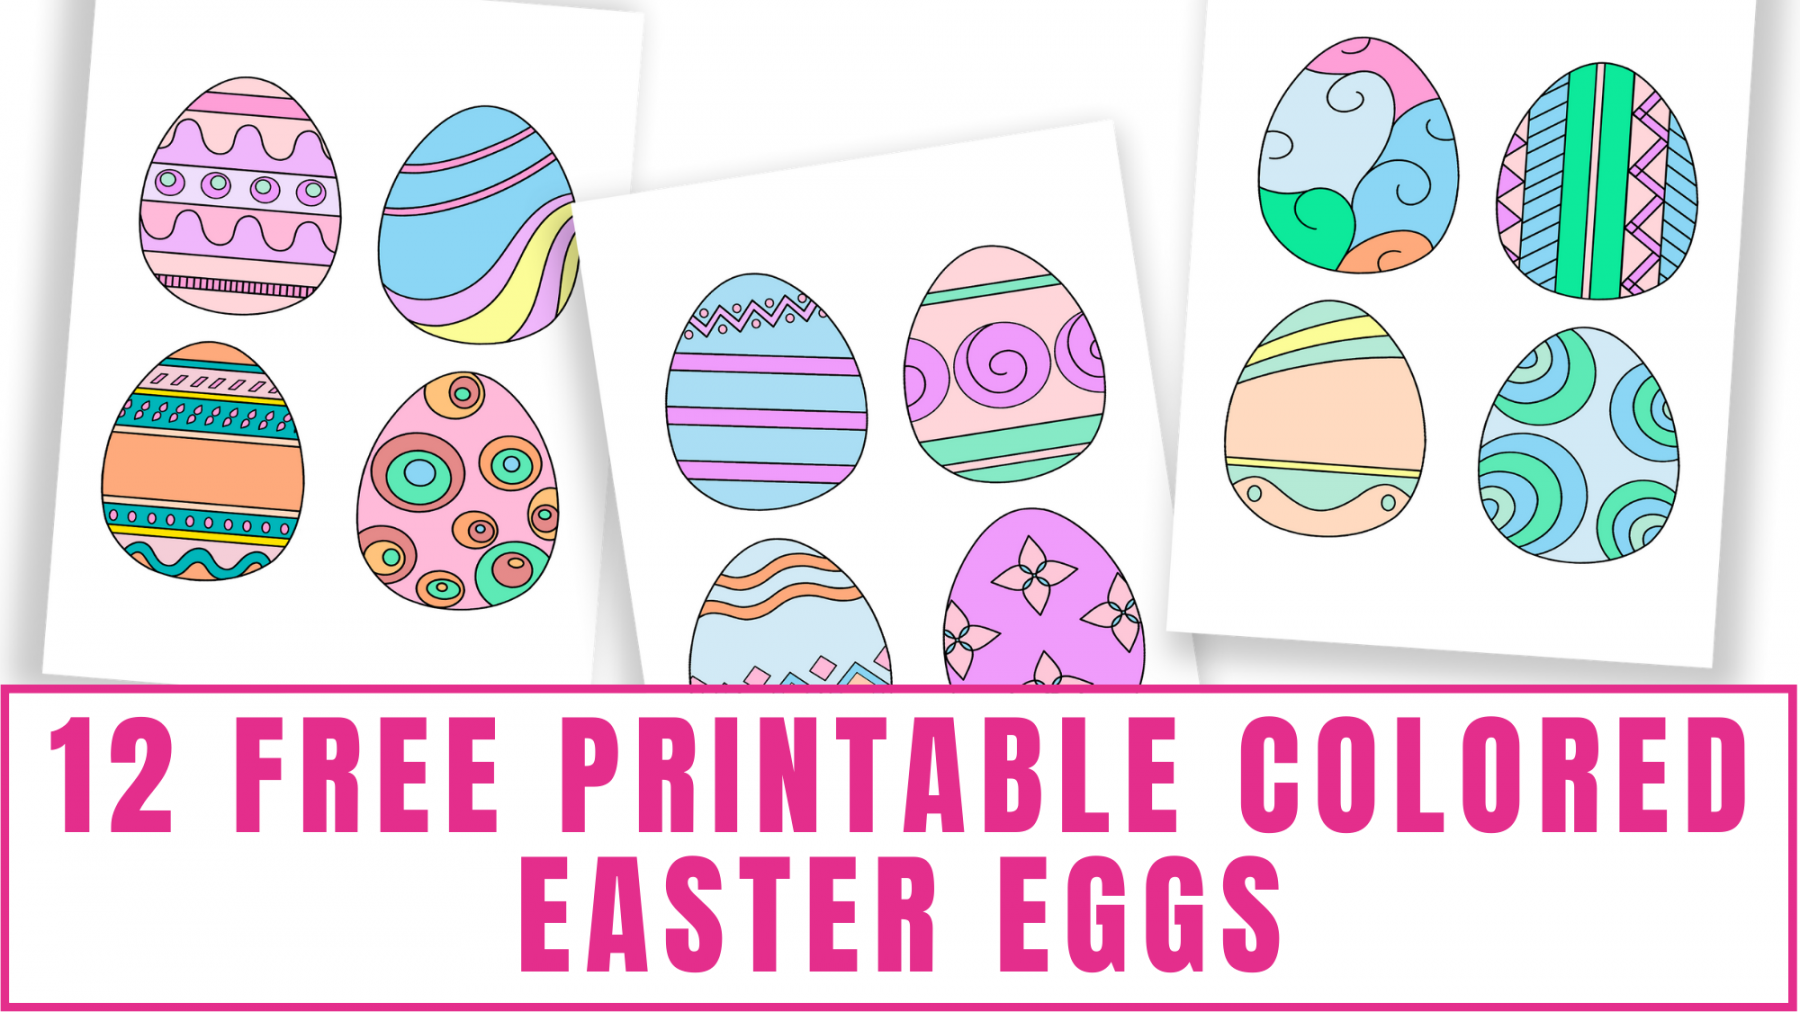 Free Printable Colored Easter Eggs - Freebie Finding Mom - FREE Printables - Free Printable Easter Eggs